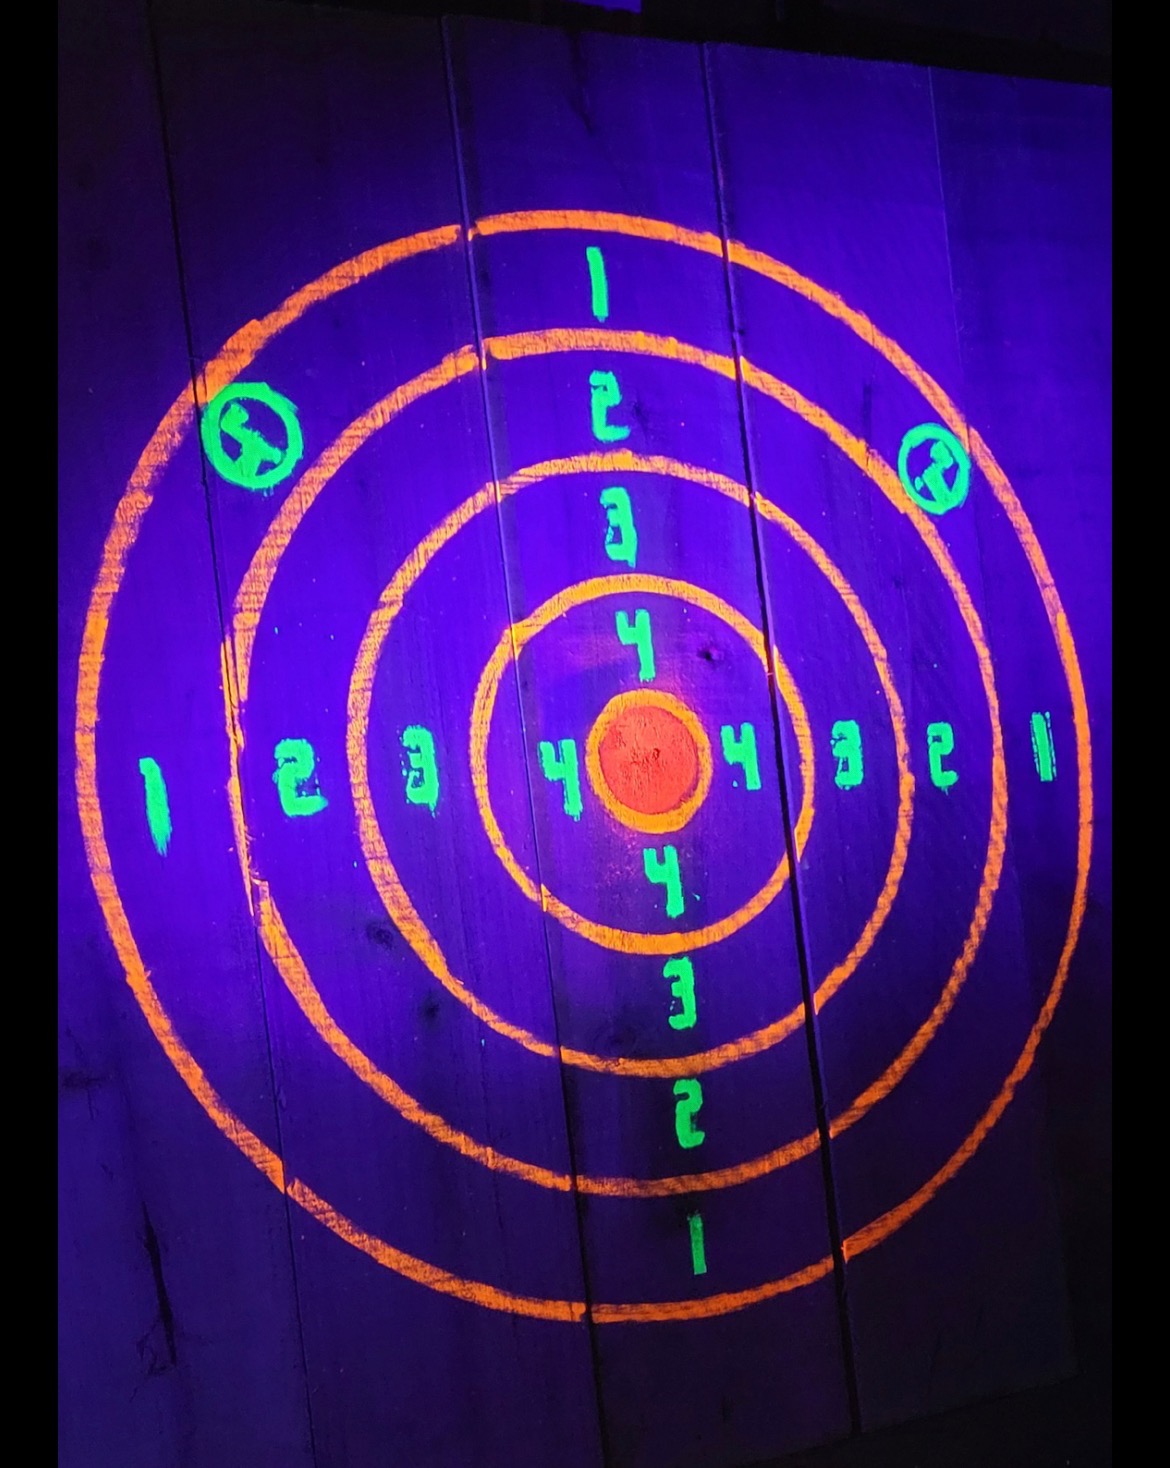 Glowing Axe Throwing Target